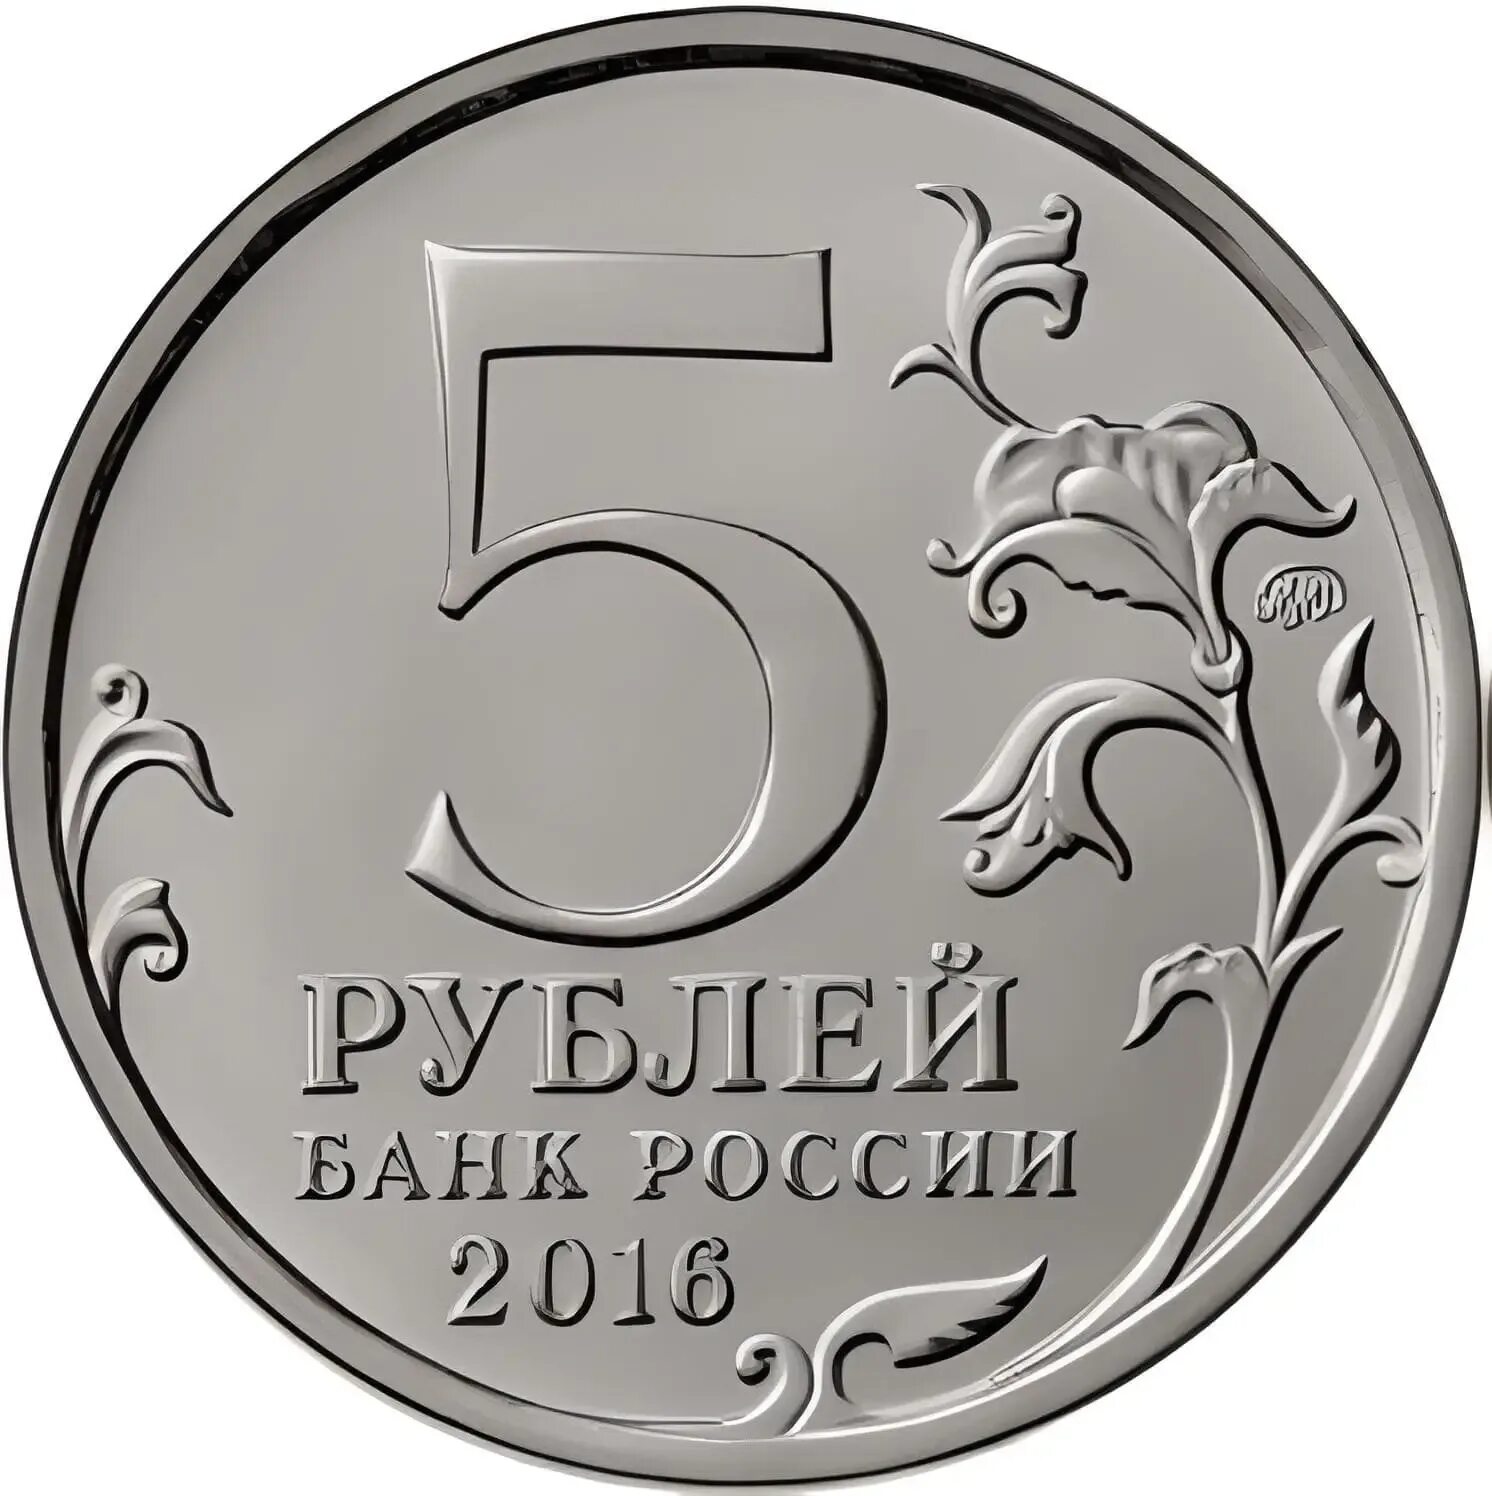 Монеты 5 рублей 2015. Монета 5 рублей. Изображение 5 рублей. Монета 2 рубля на прозрачном фоне. Монета 5 руб для фотошопа.